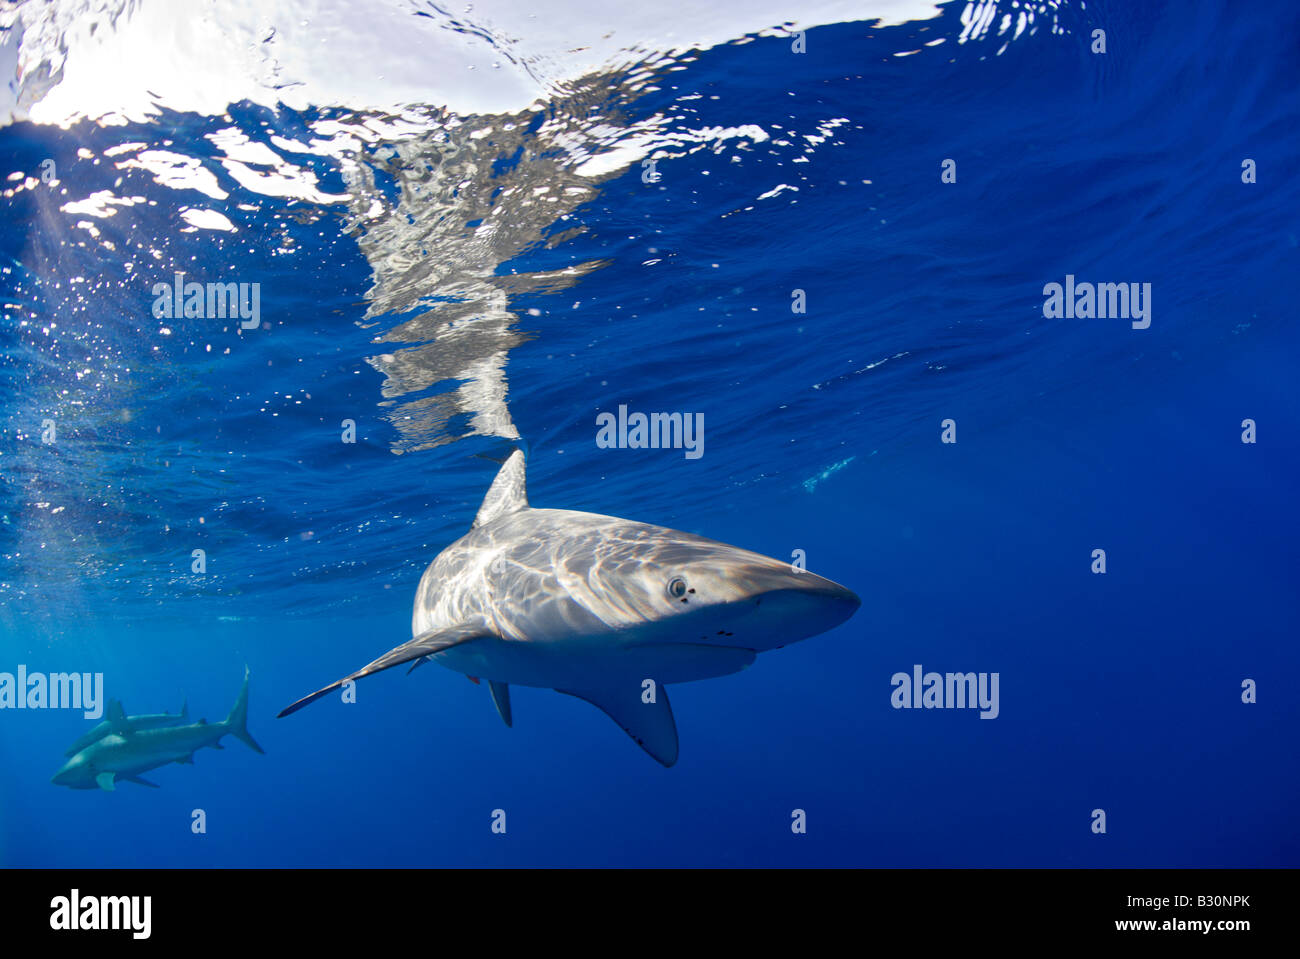 Galapagos Haie Carcharhinus Galapagensis Marshallinseln Bikini Atoll  Mikronesien Pazifischen Ozean Stockfotografie - Alamy